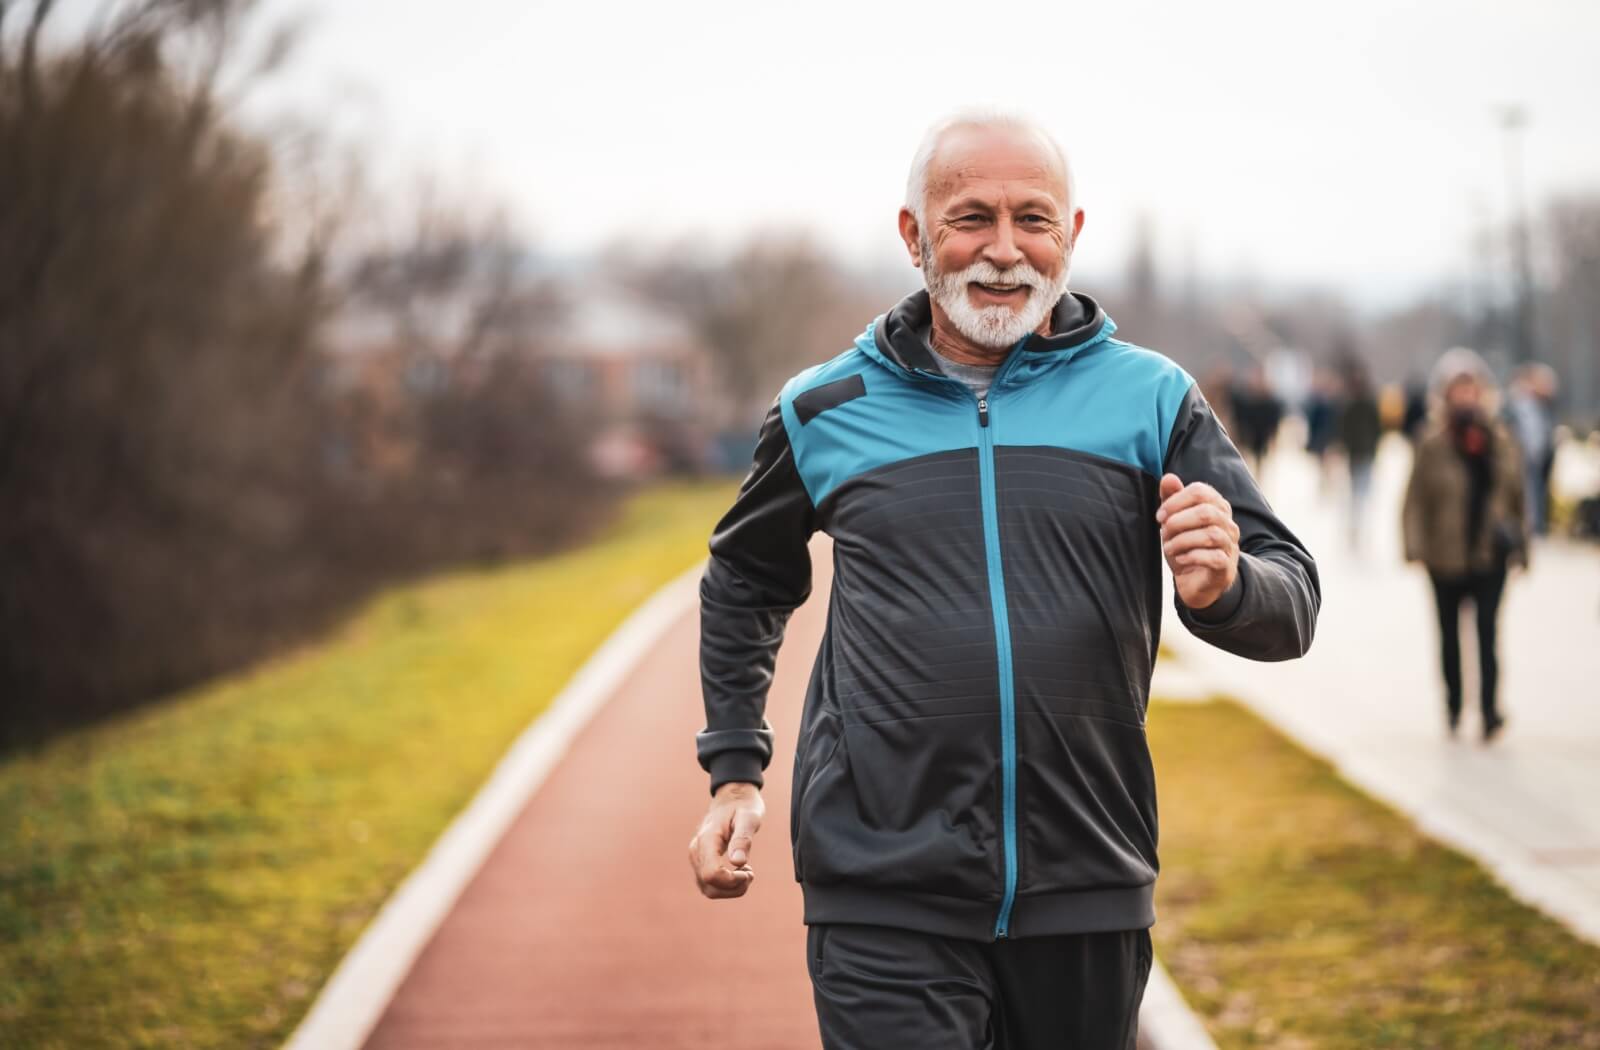 A happy older adult man jogging.